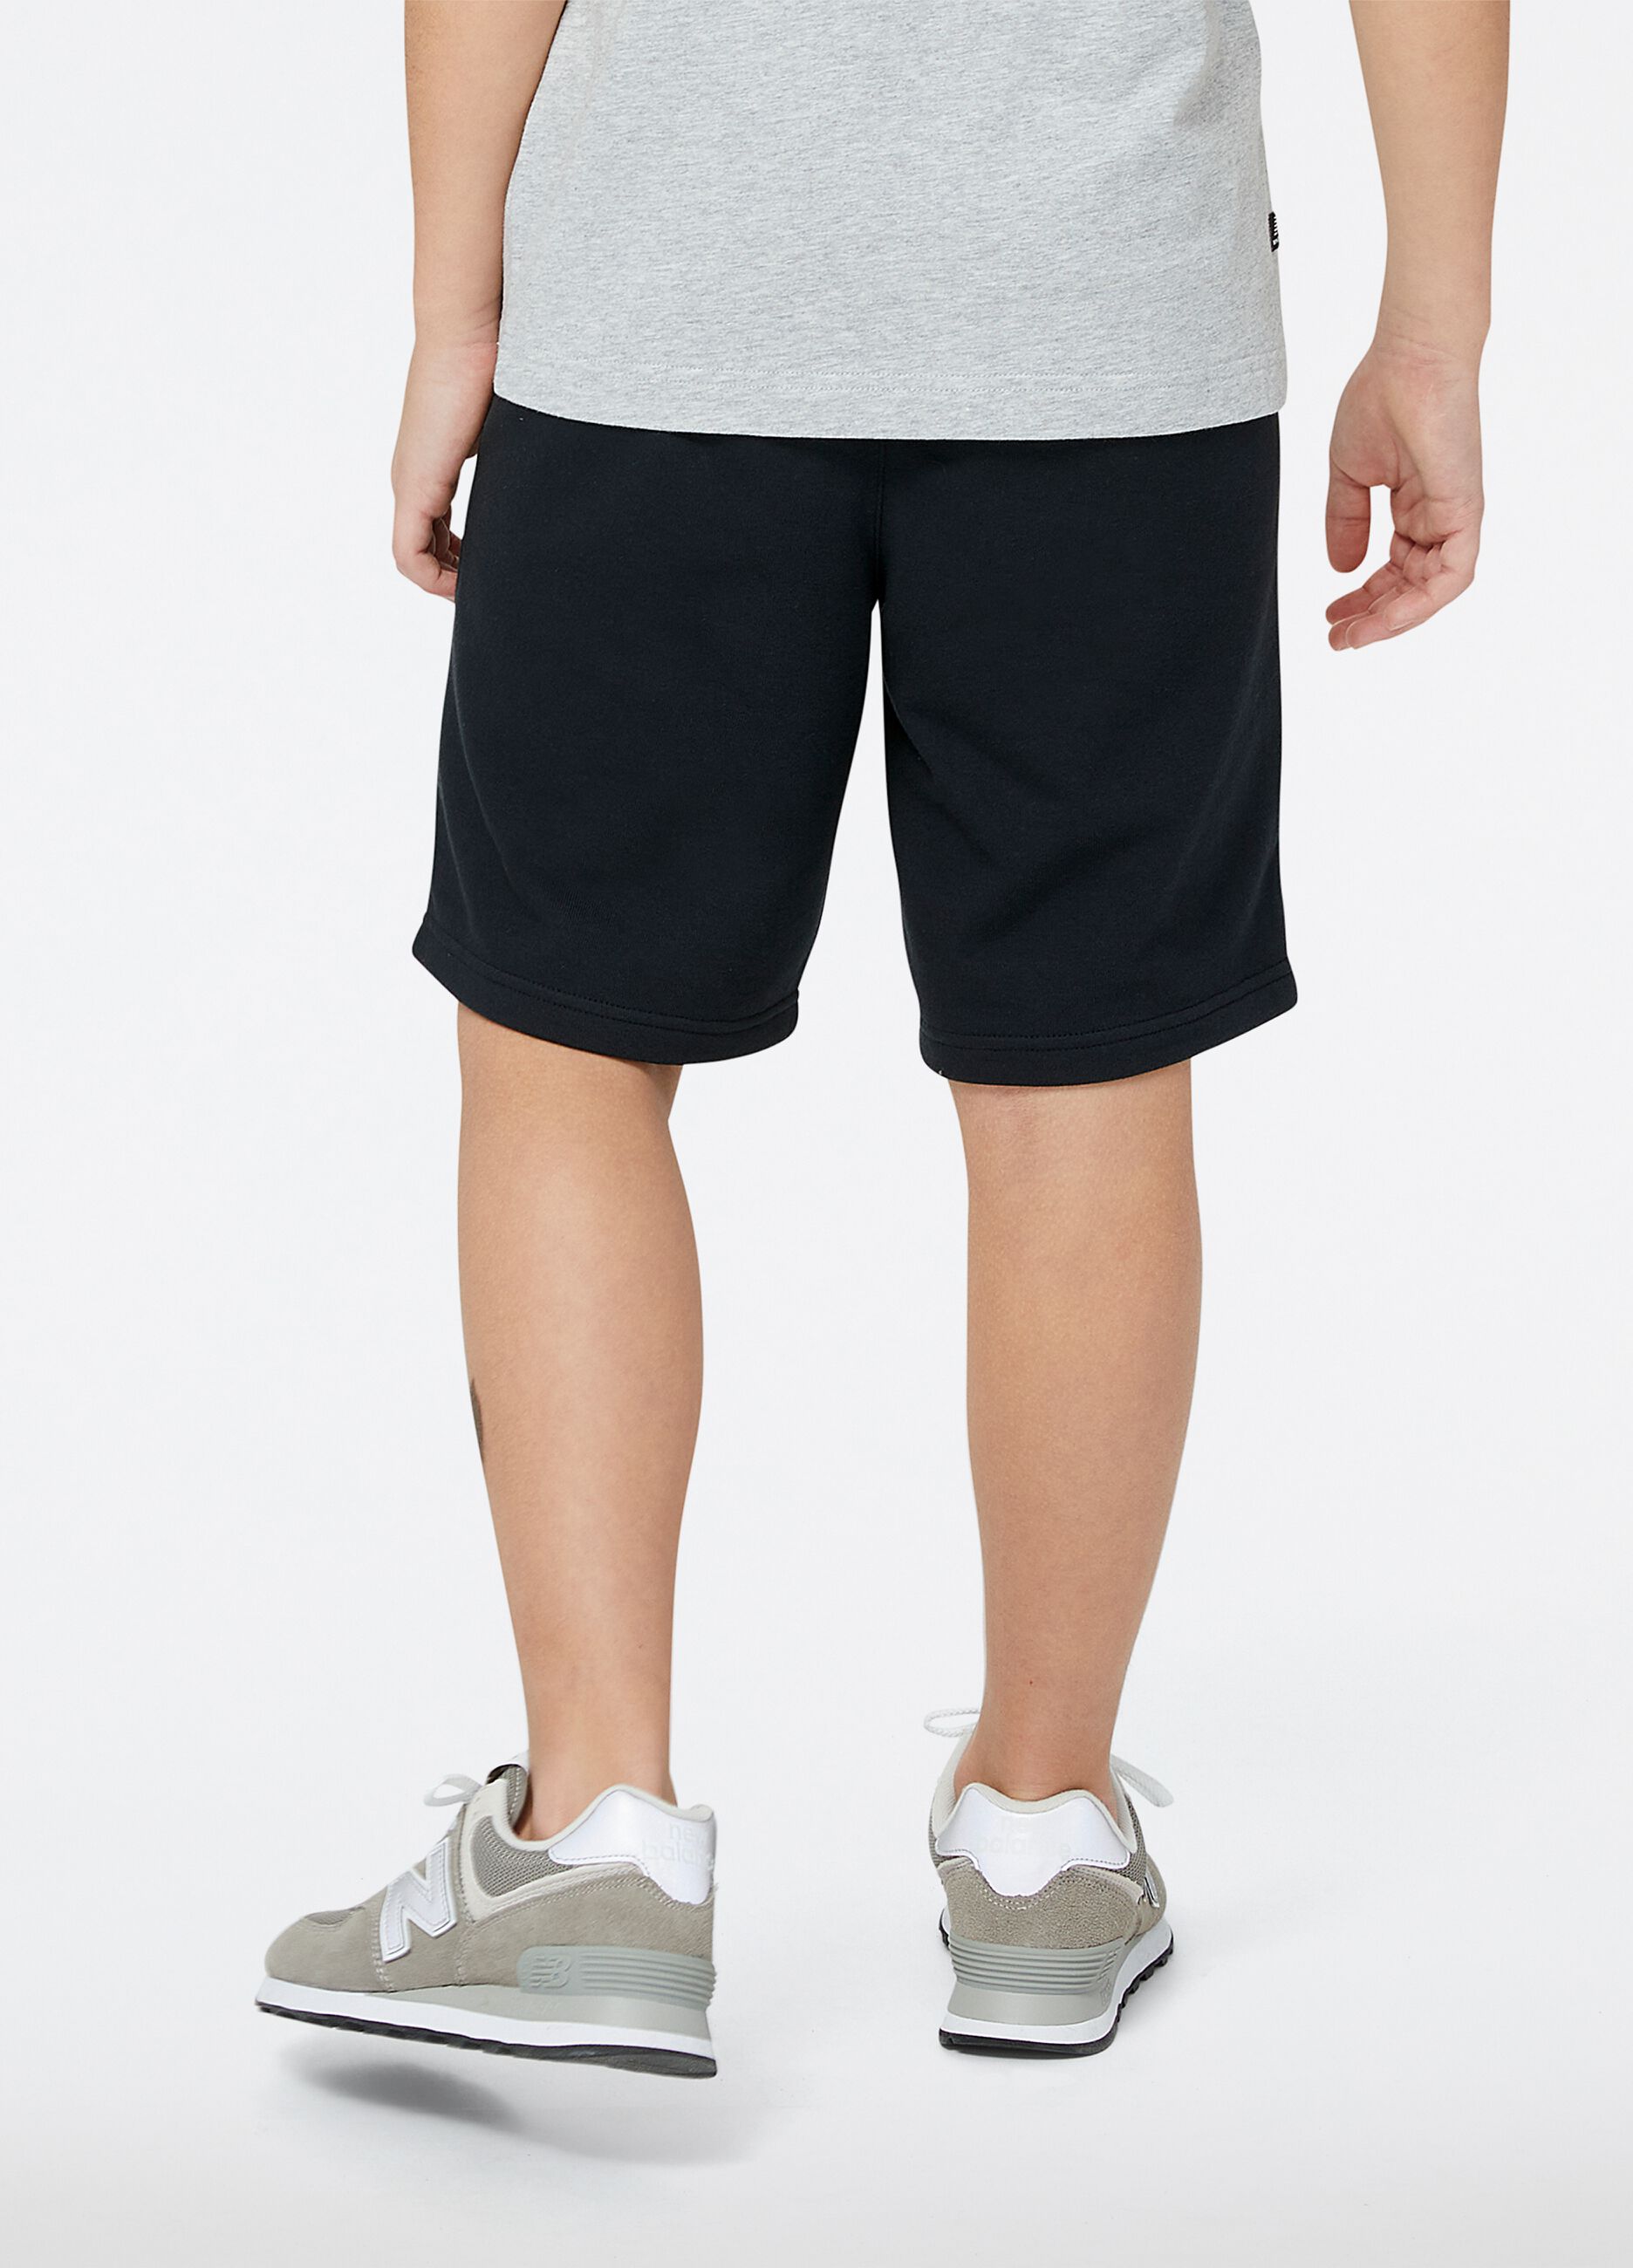 Shorts with Essentials logo